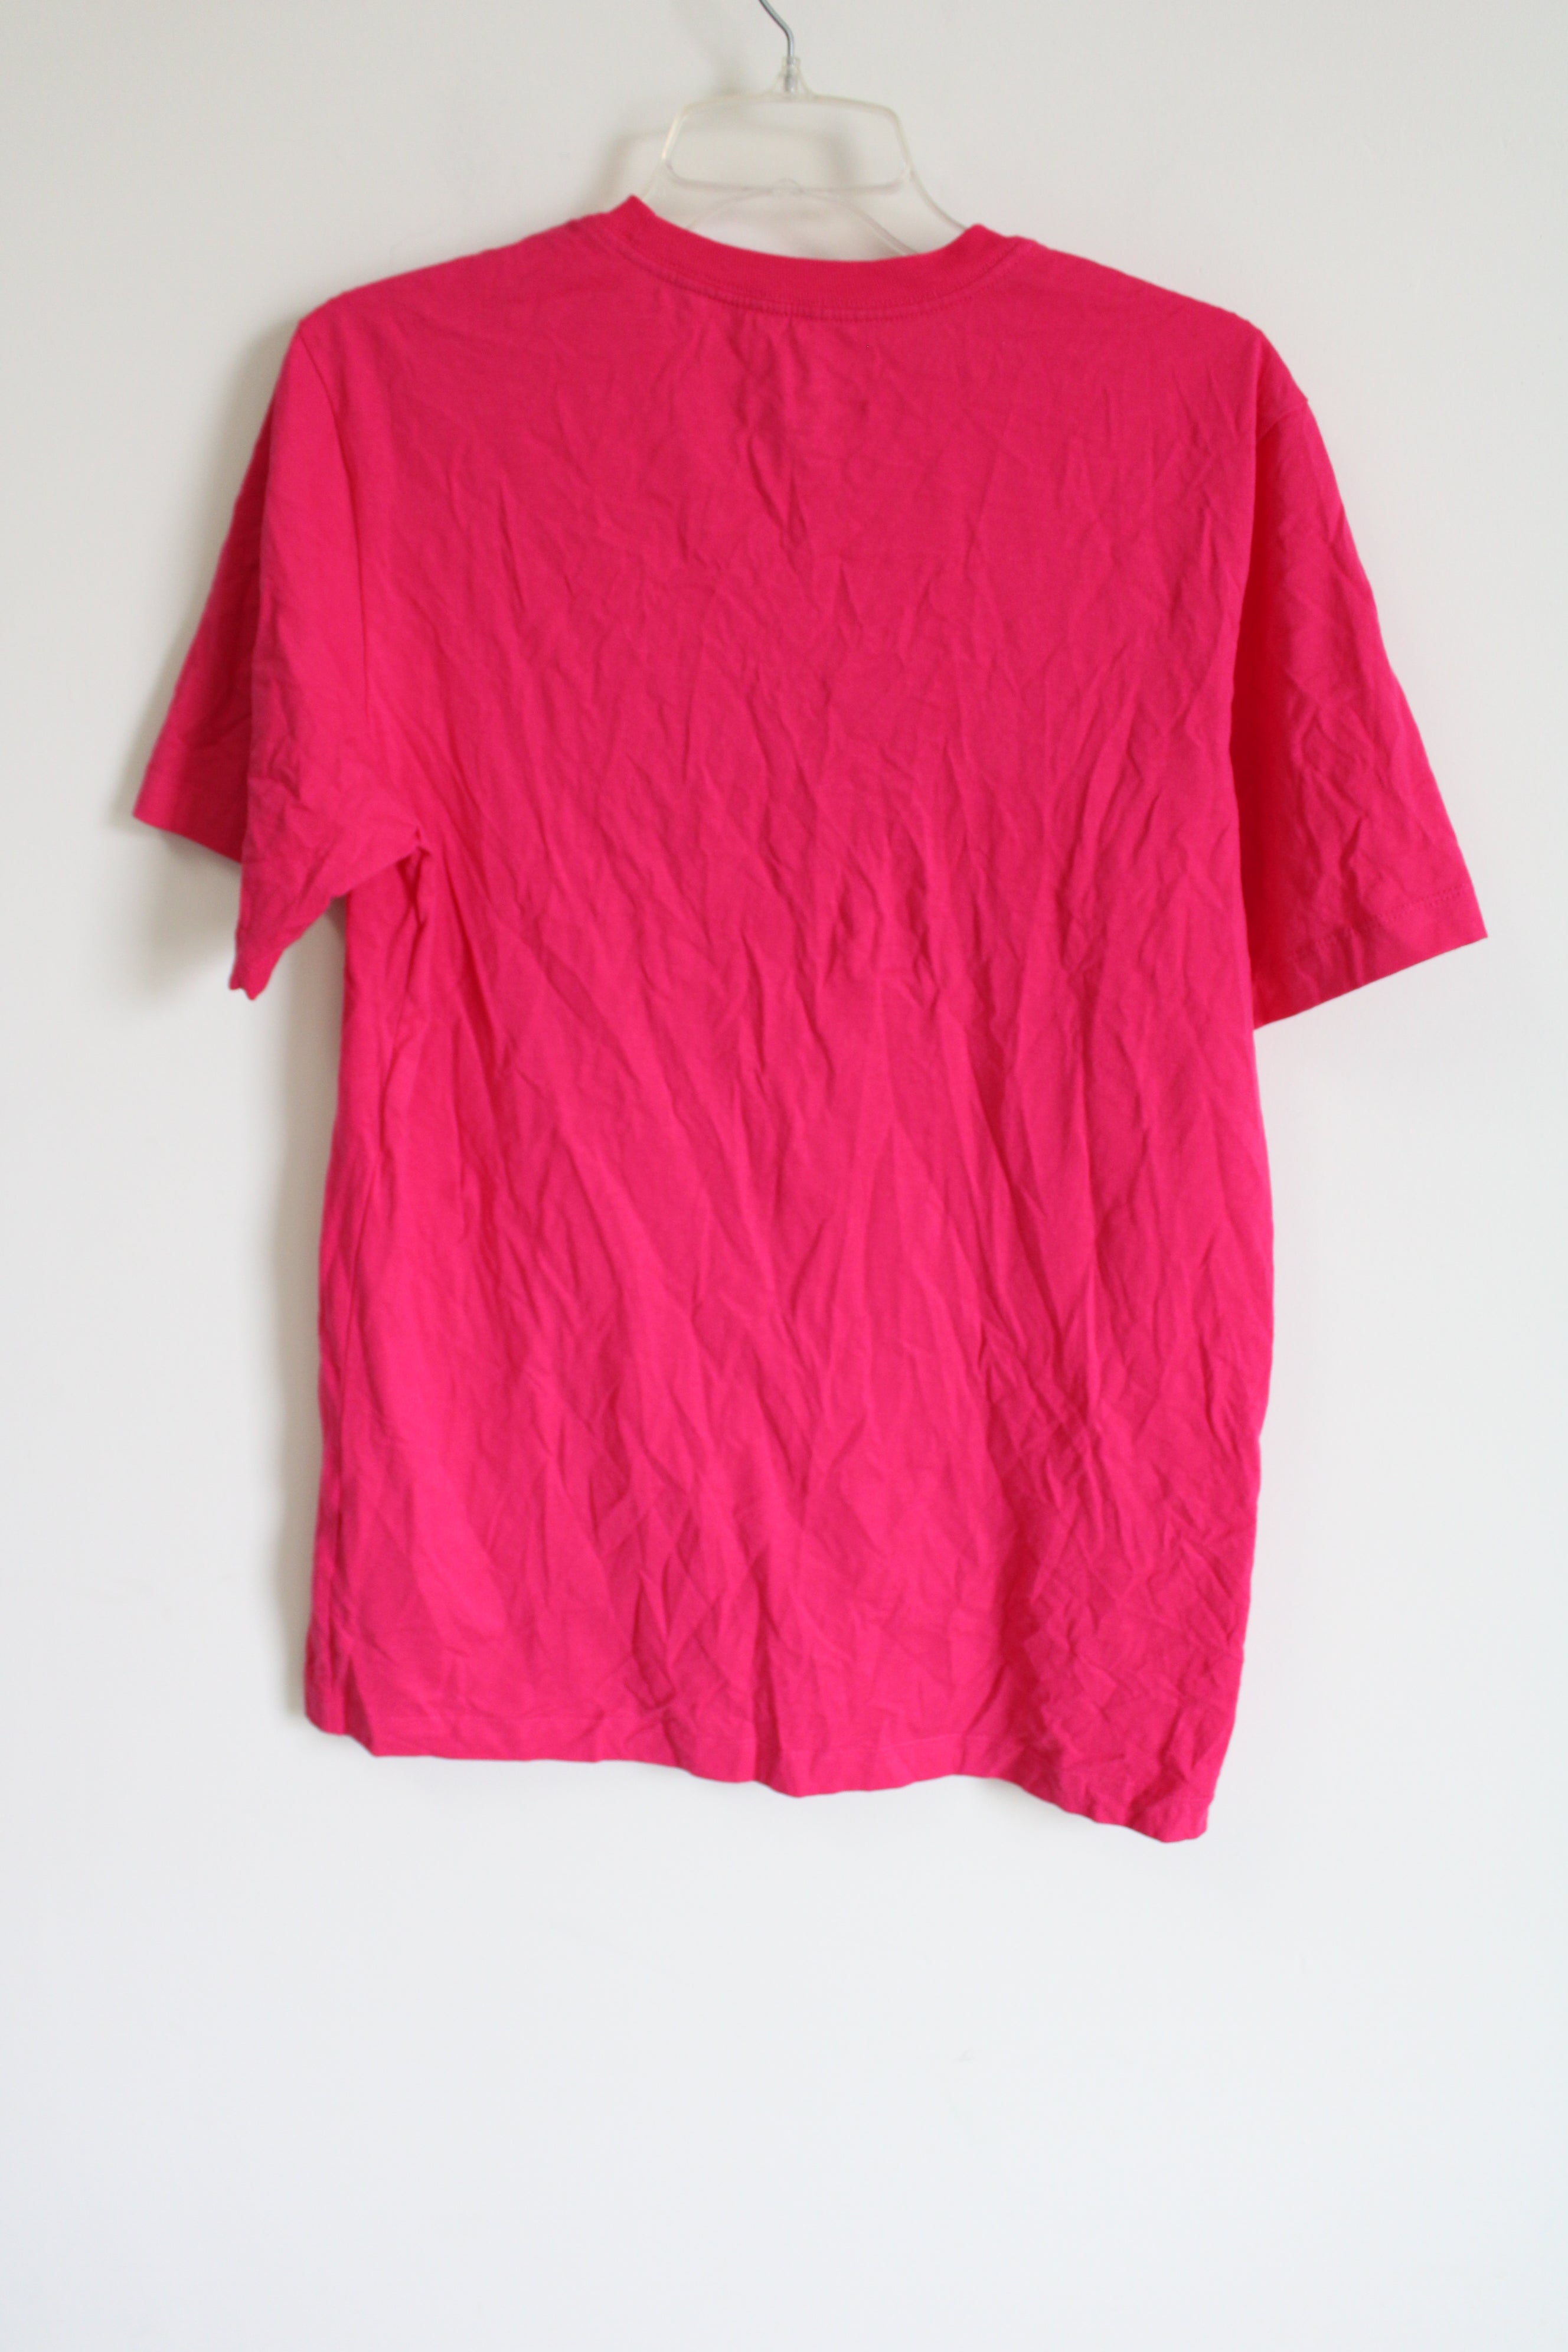 The Nike Tee Pink Logo Shirt | S